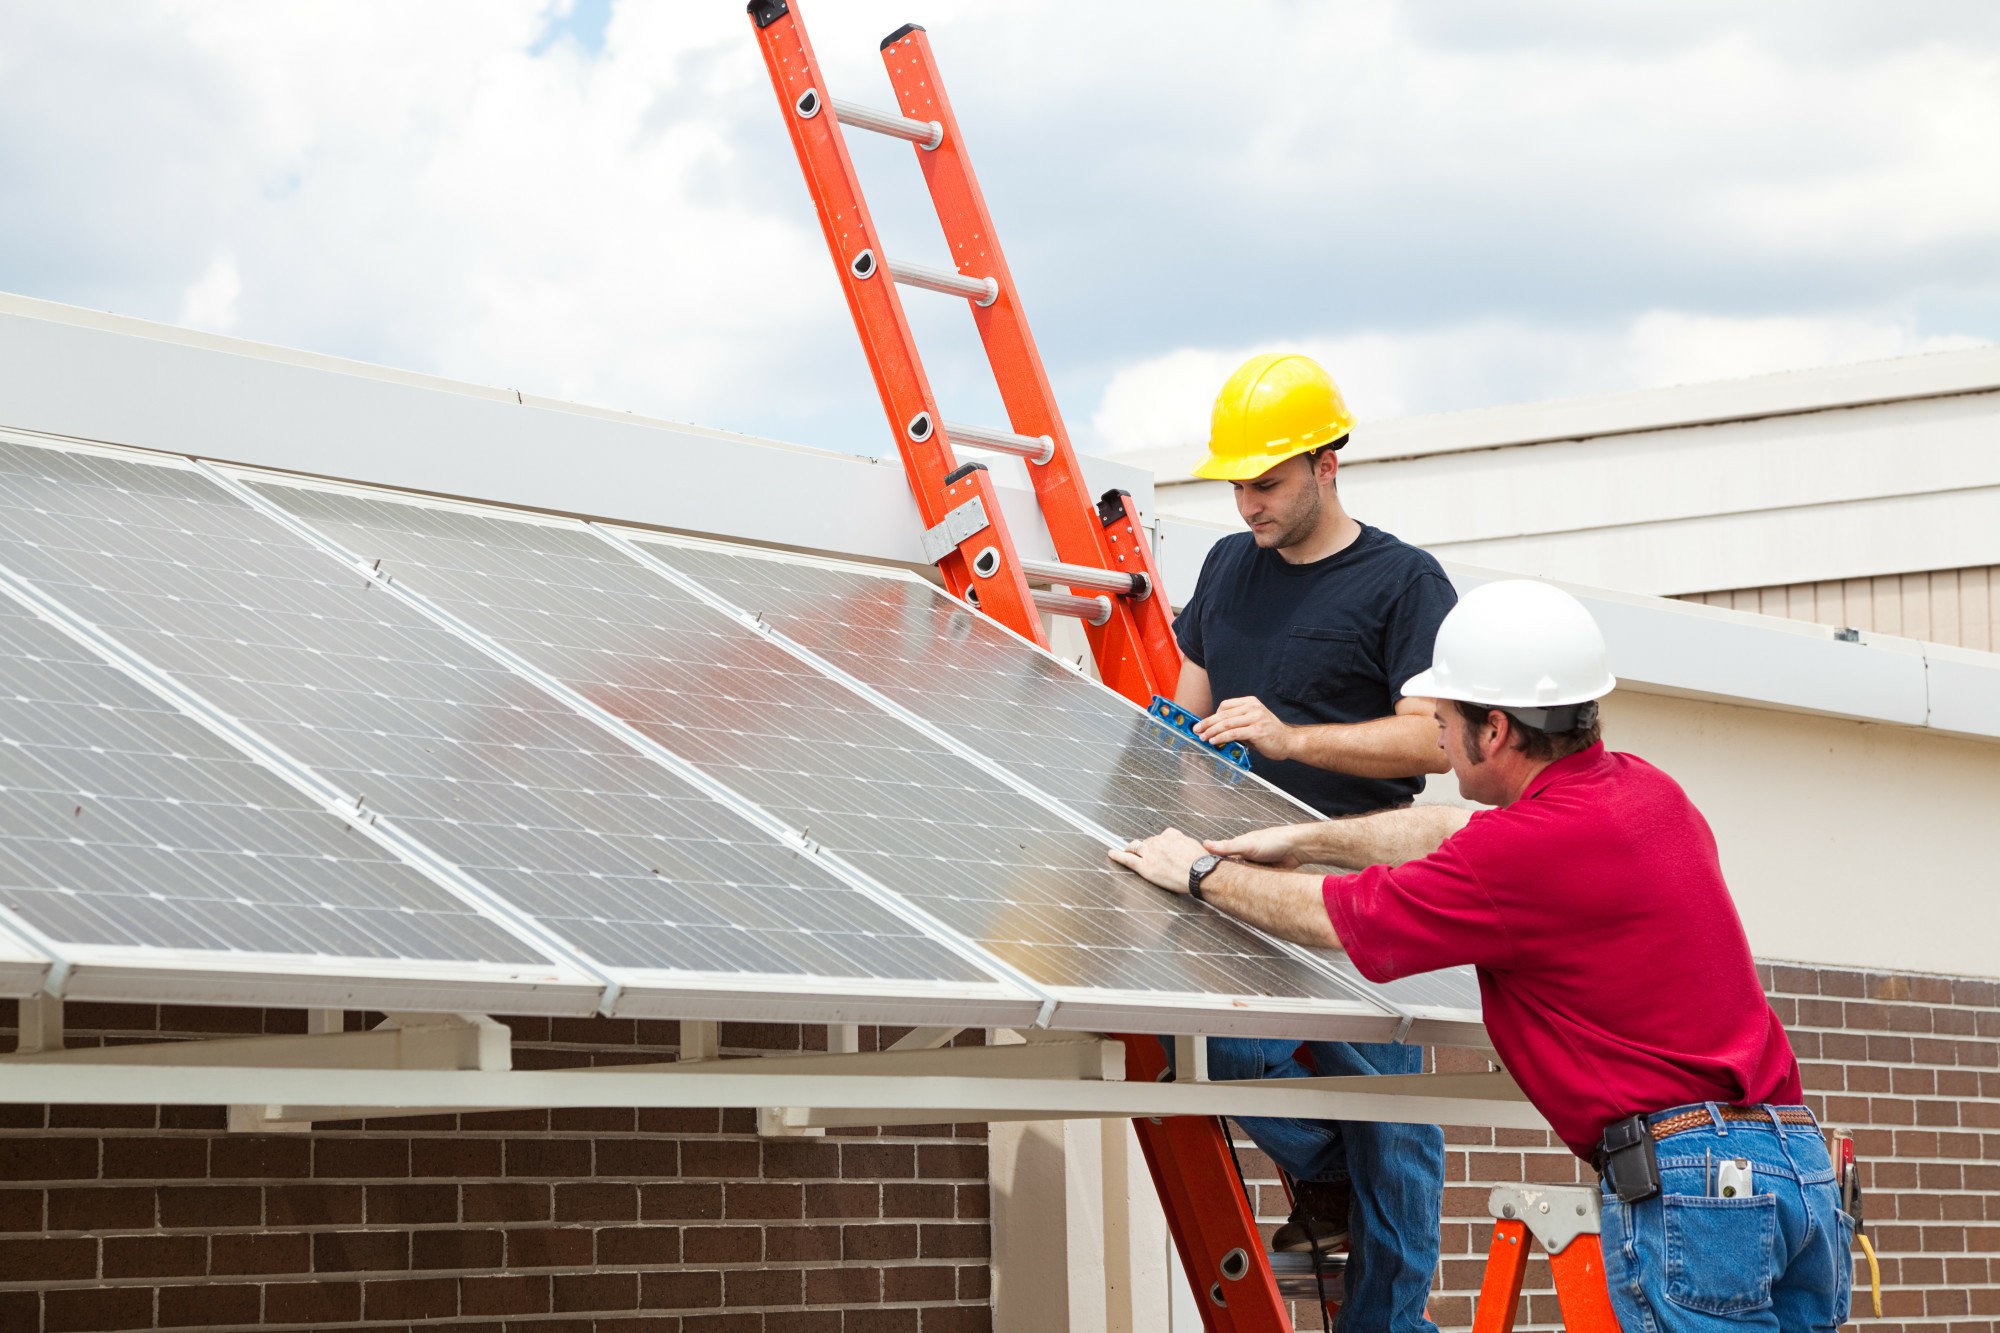 DIY Solar Panel Installation: Is It a Good Idea?